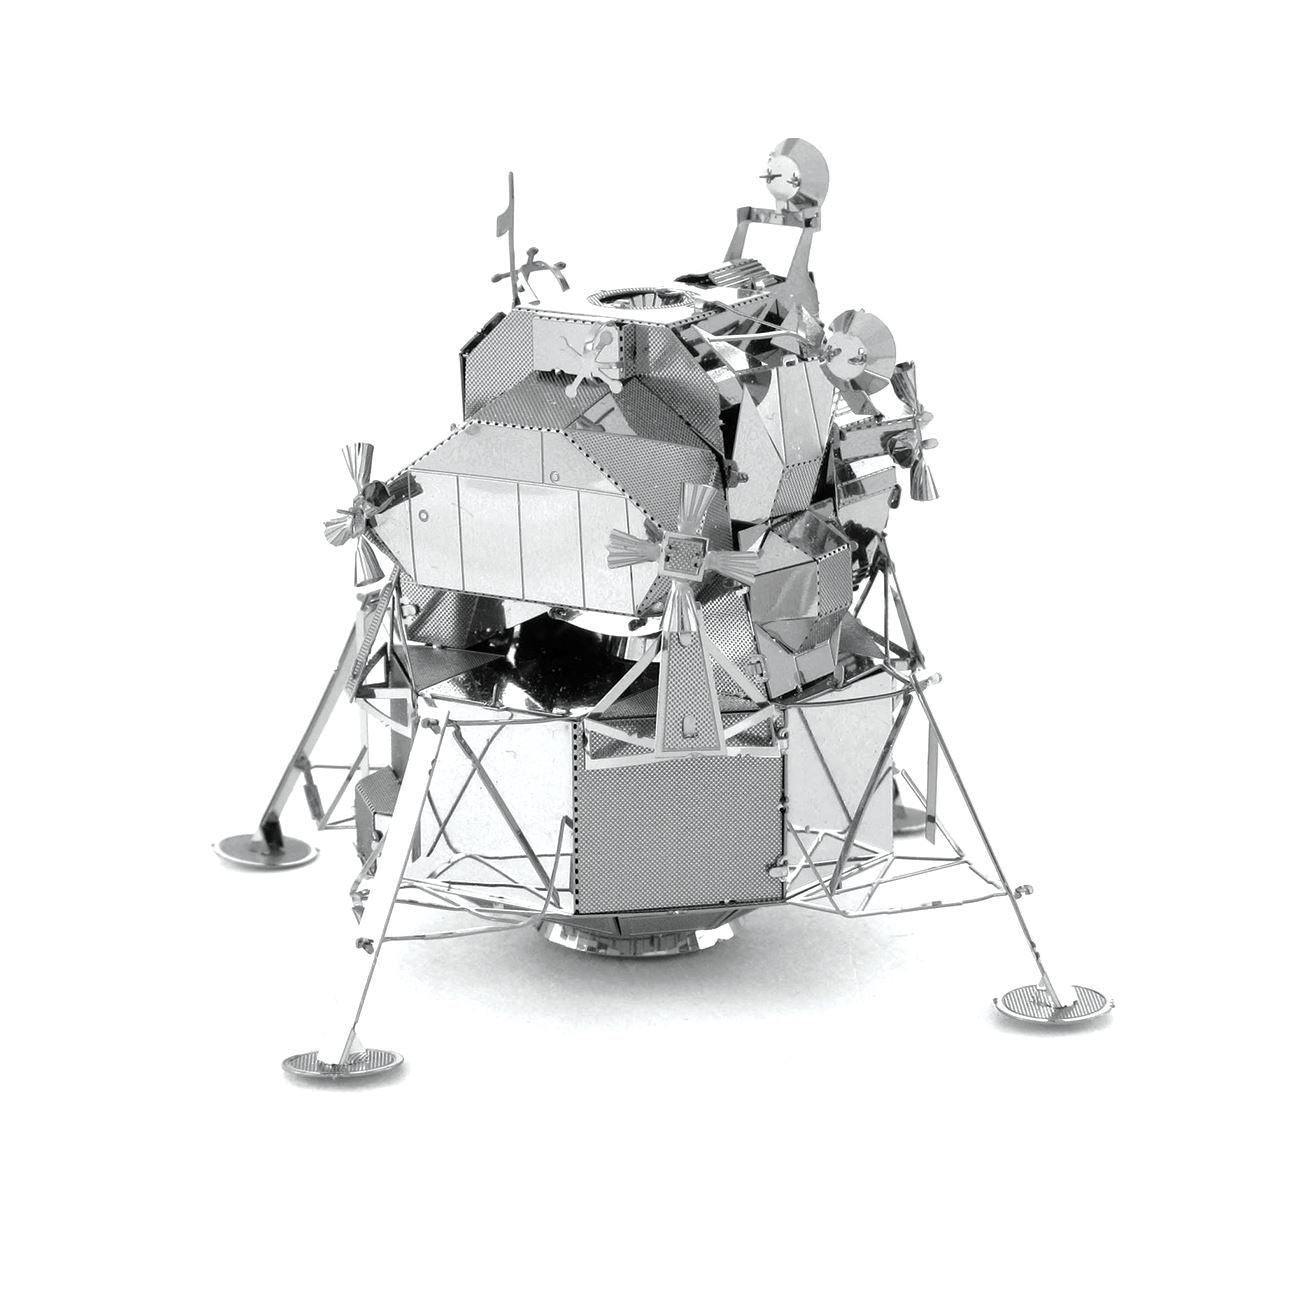 Metal Earth 3D Model Kit - Apollo Lunar Module